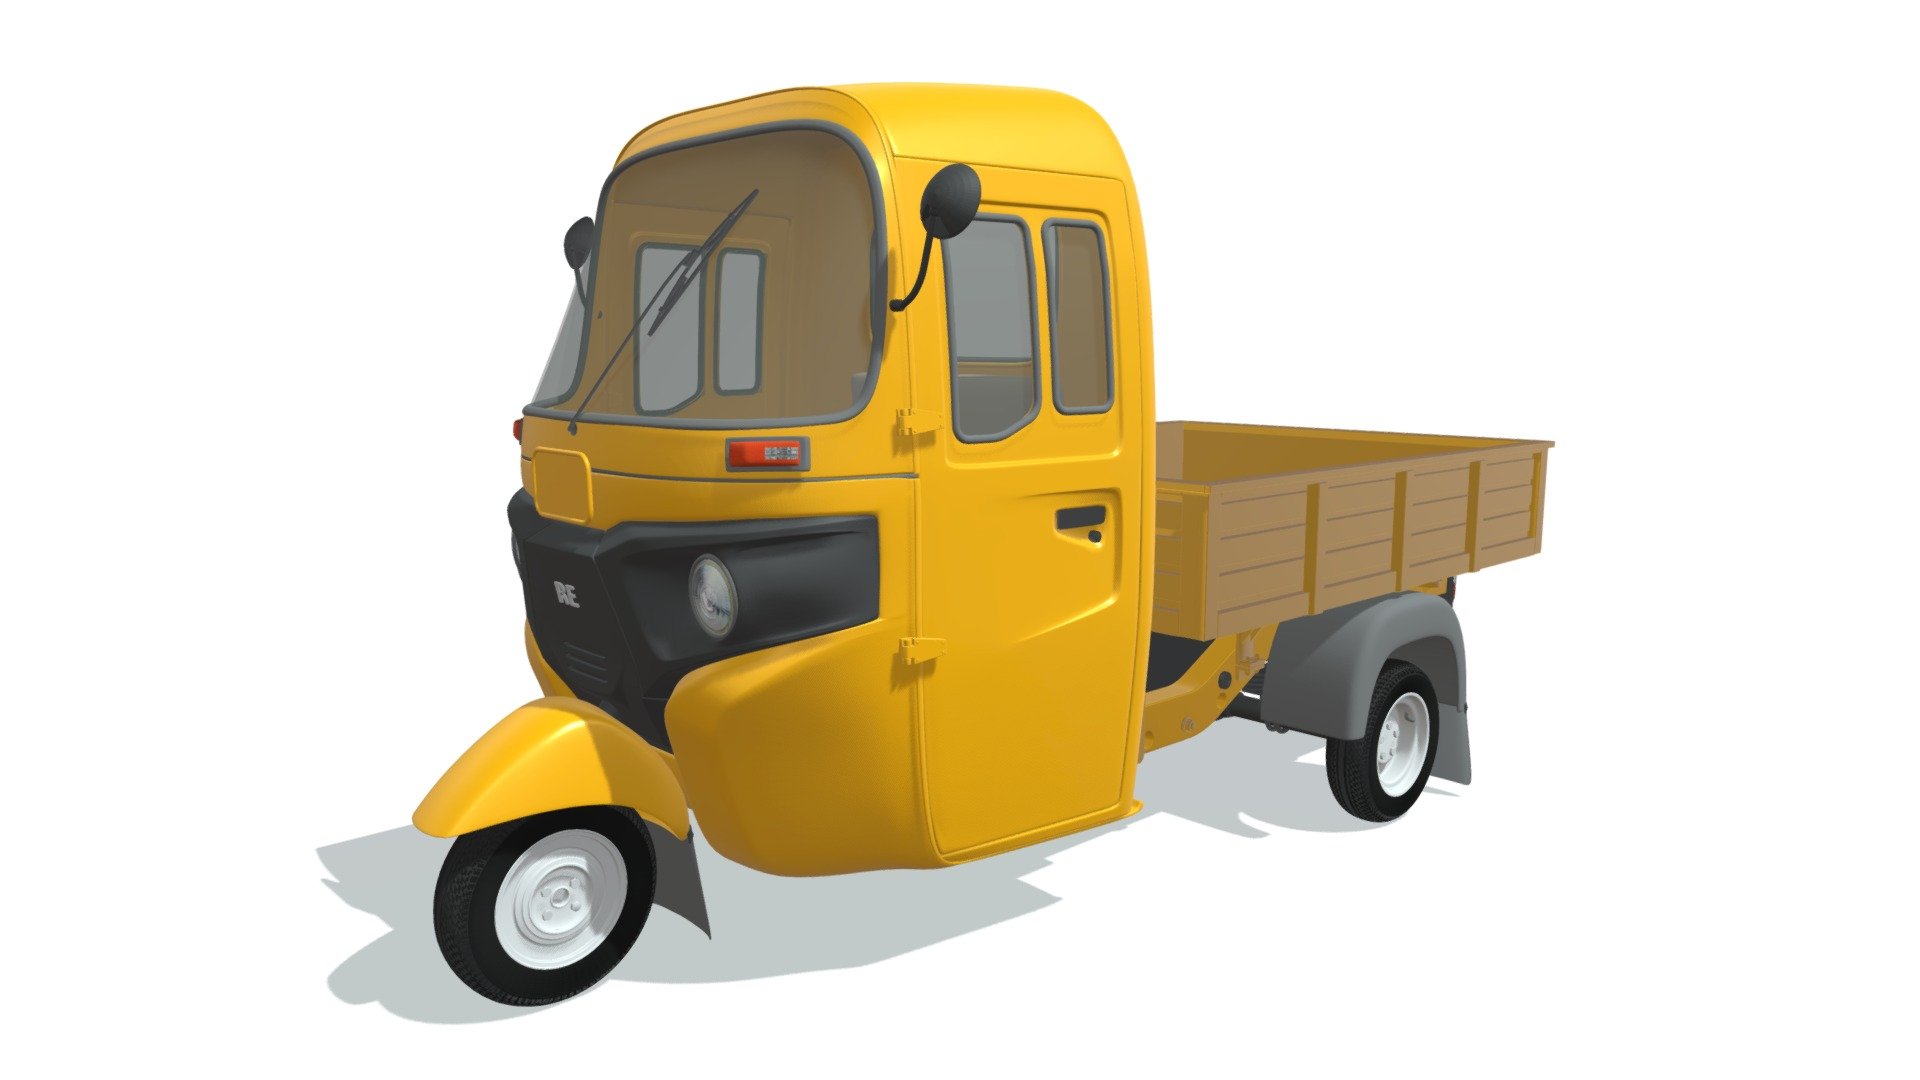 High quality 3D model of auto Rickshaw mini truck 3 wheeler carrier vehicle 3d model